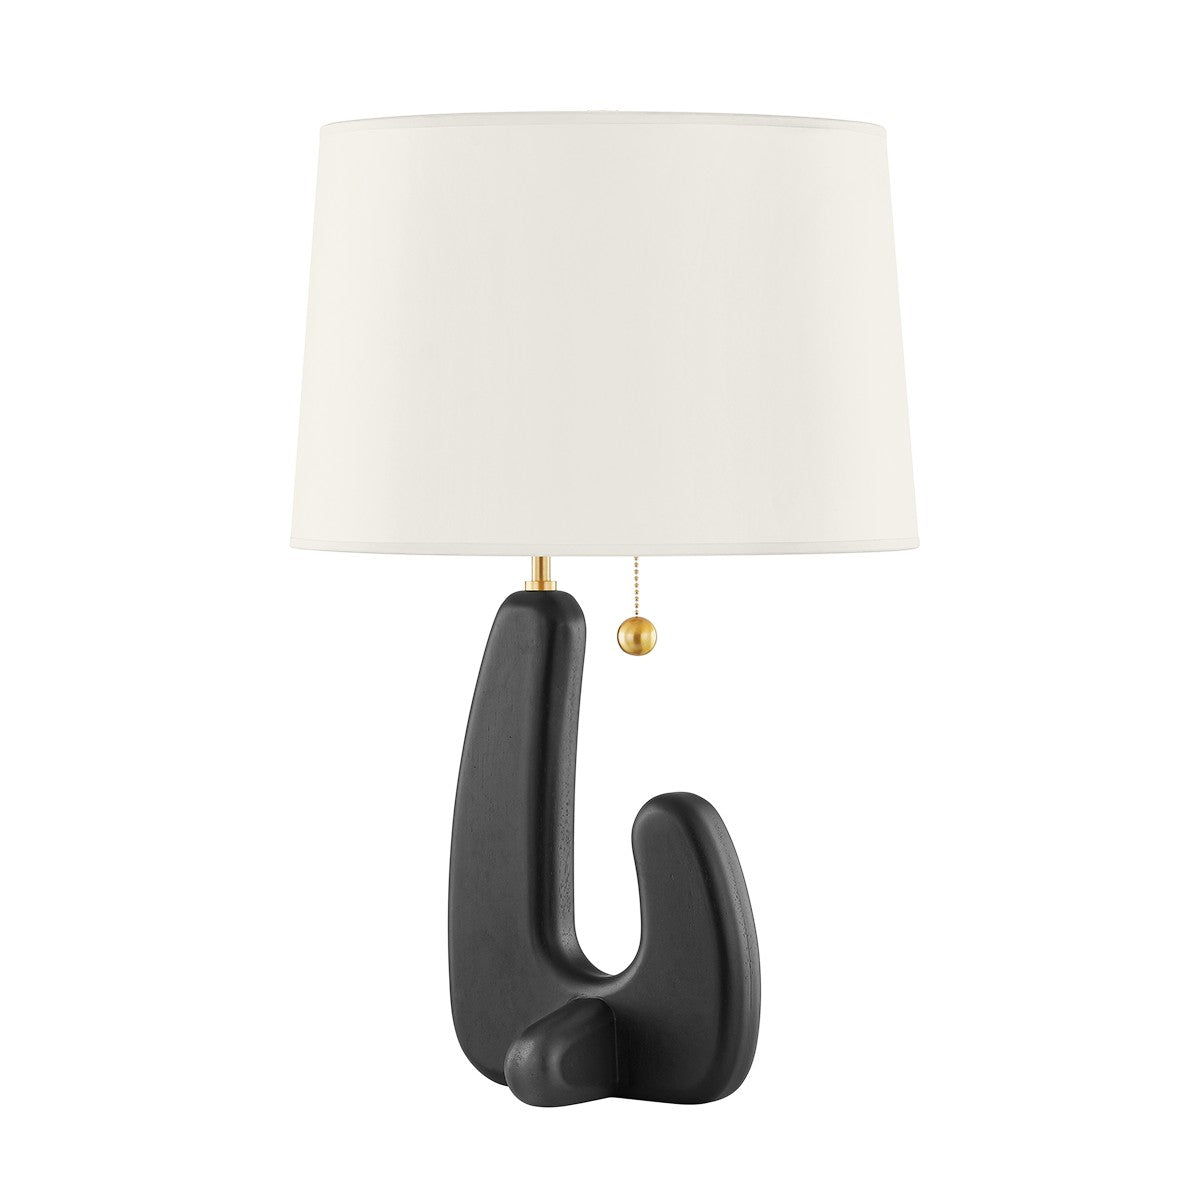 Mitzi - HL818201-AGB - One Light Table Lamp - Regina - Aged Brass